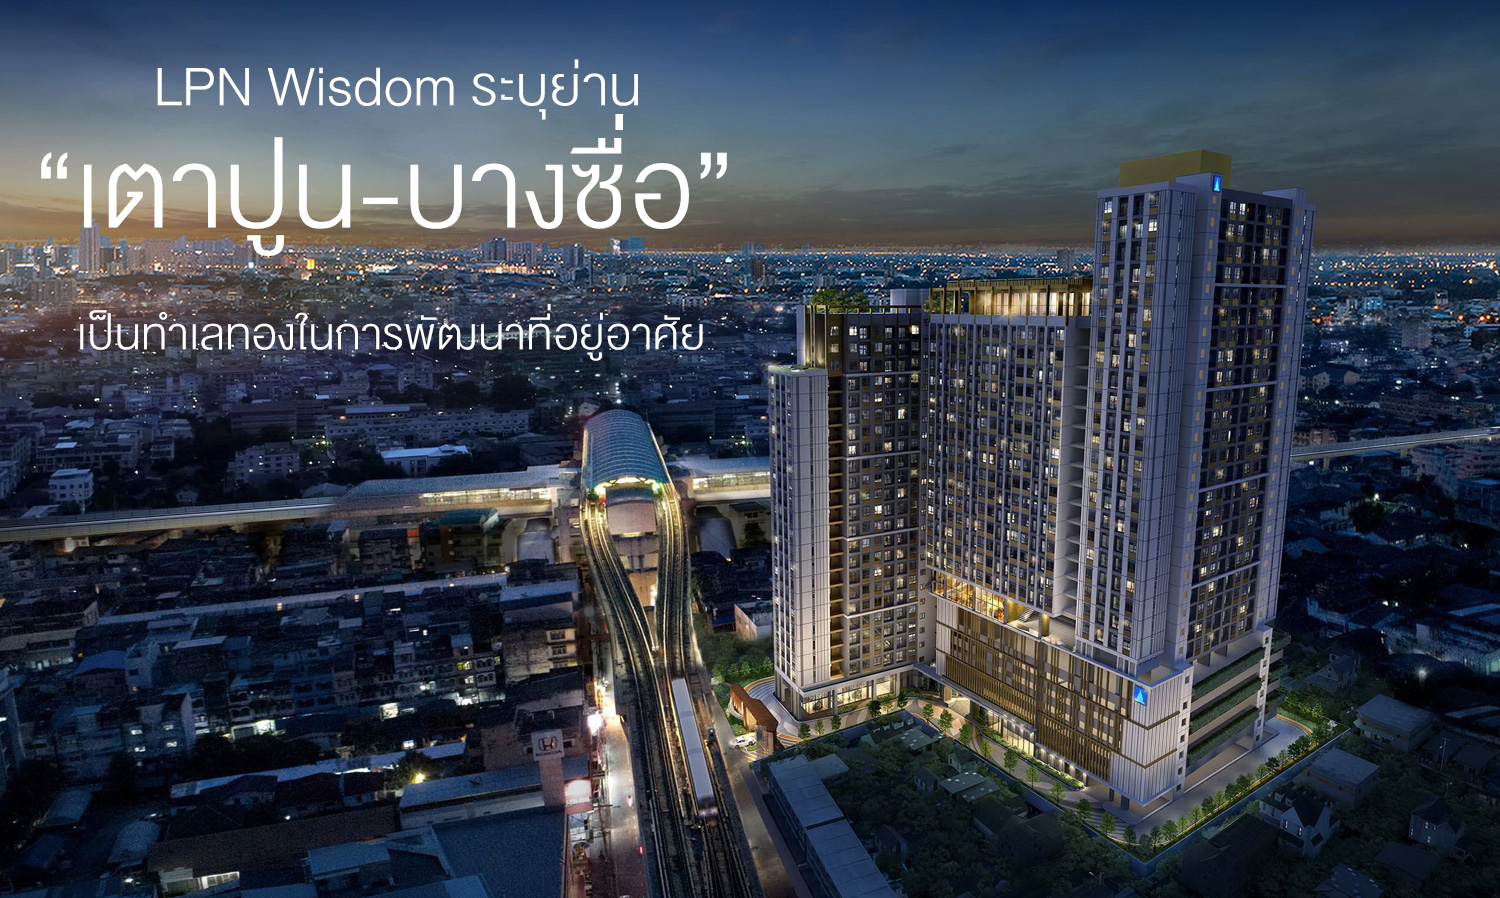 LPN Wisdom ระบุย่าน“เตาปูน-บางซื่อ” เป็นทำเลทองในการพัฒนาที่อยู่อาศัย ตอบโจทย์การเป็นย่านธุรกิจแห่งใหม่ของกรุงเทพฯ และศูนย์กลางระบบขนส่งมวลชนที่ใหญ่ที่สุดในประเทศไทย